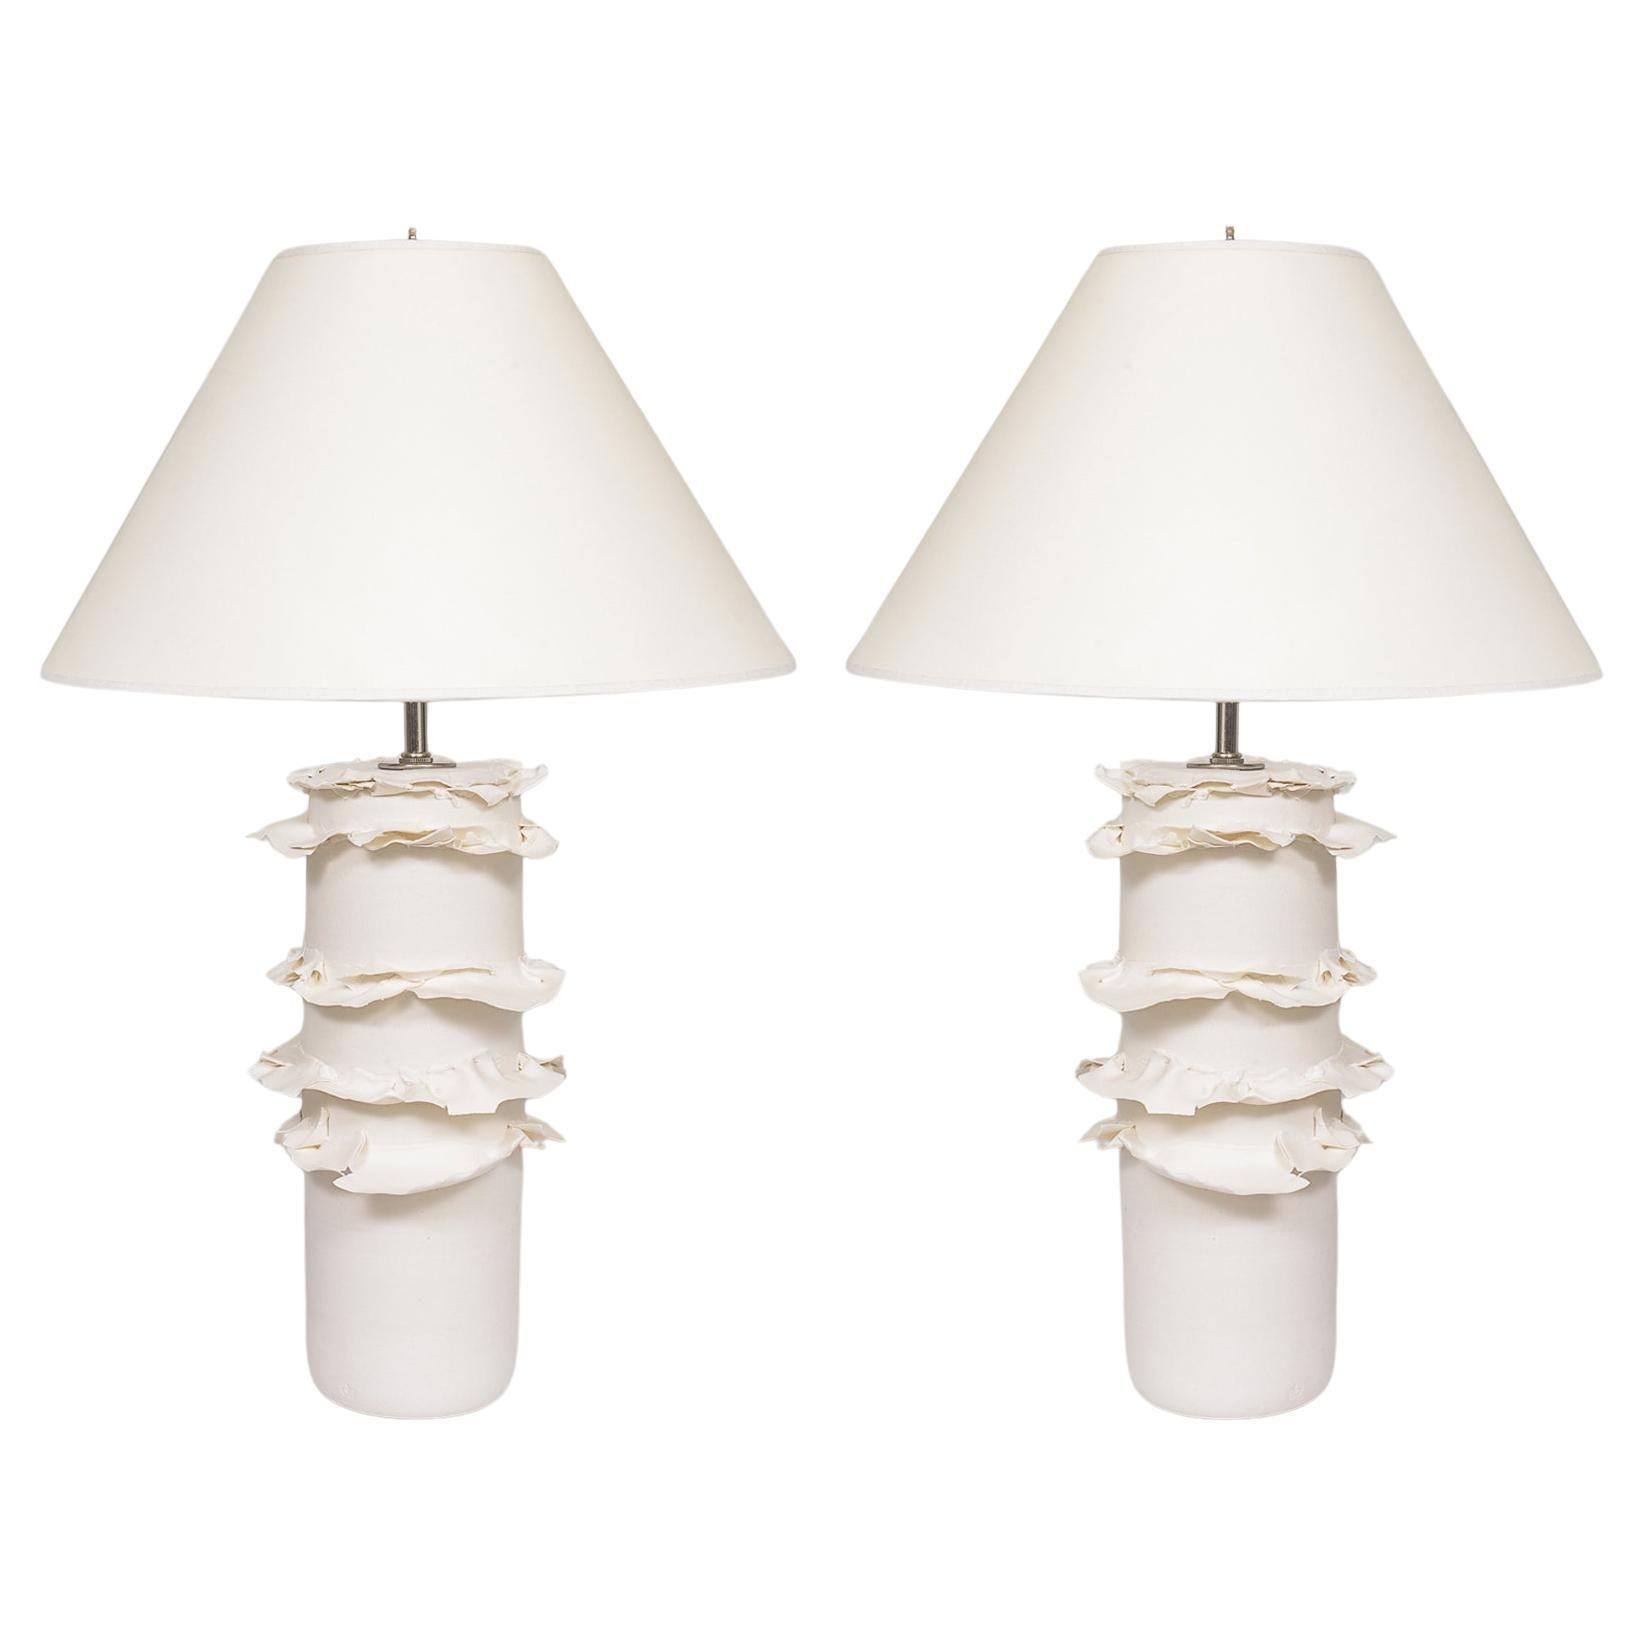 Pair of French Bespoke Ceramic Ruffle Lamps